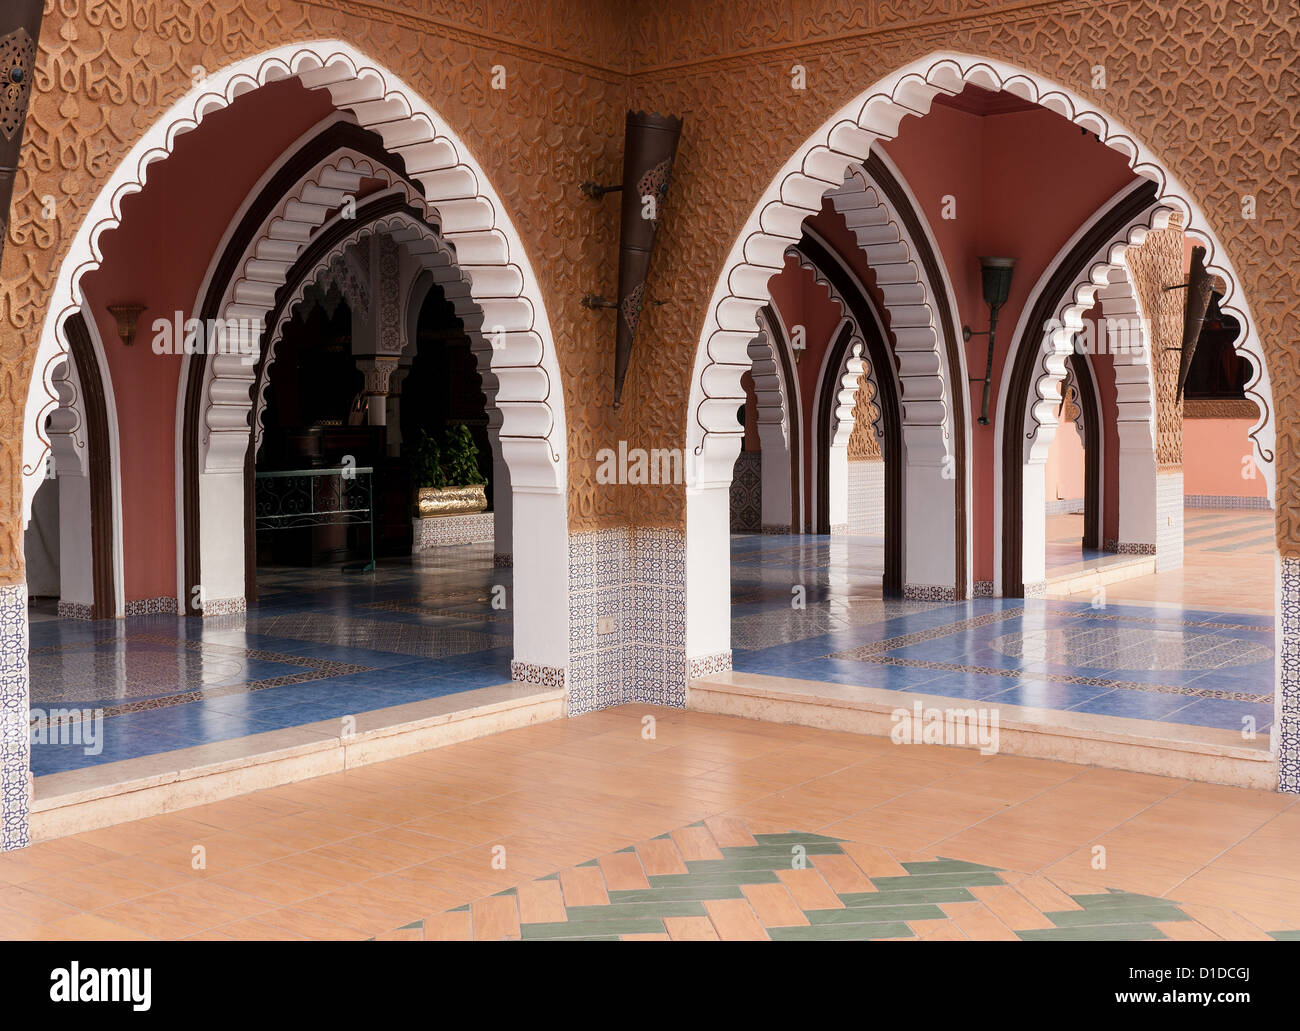 Archways inside Fantasia, an entertainment centre in Sharm El Sheikh, Egypt Stock Photo